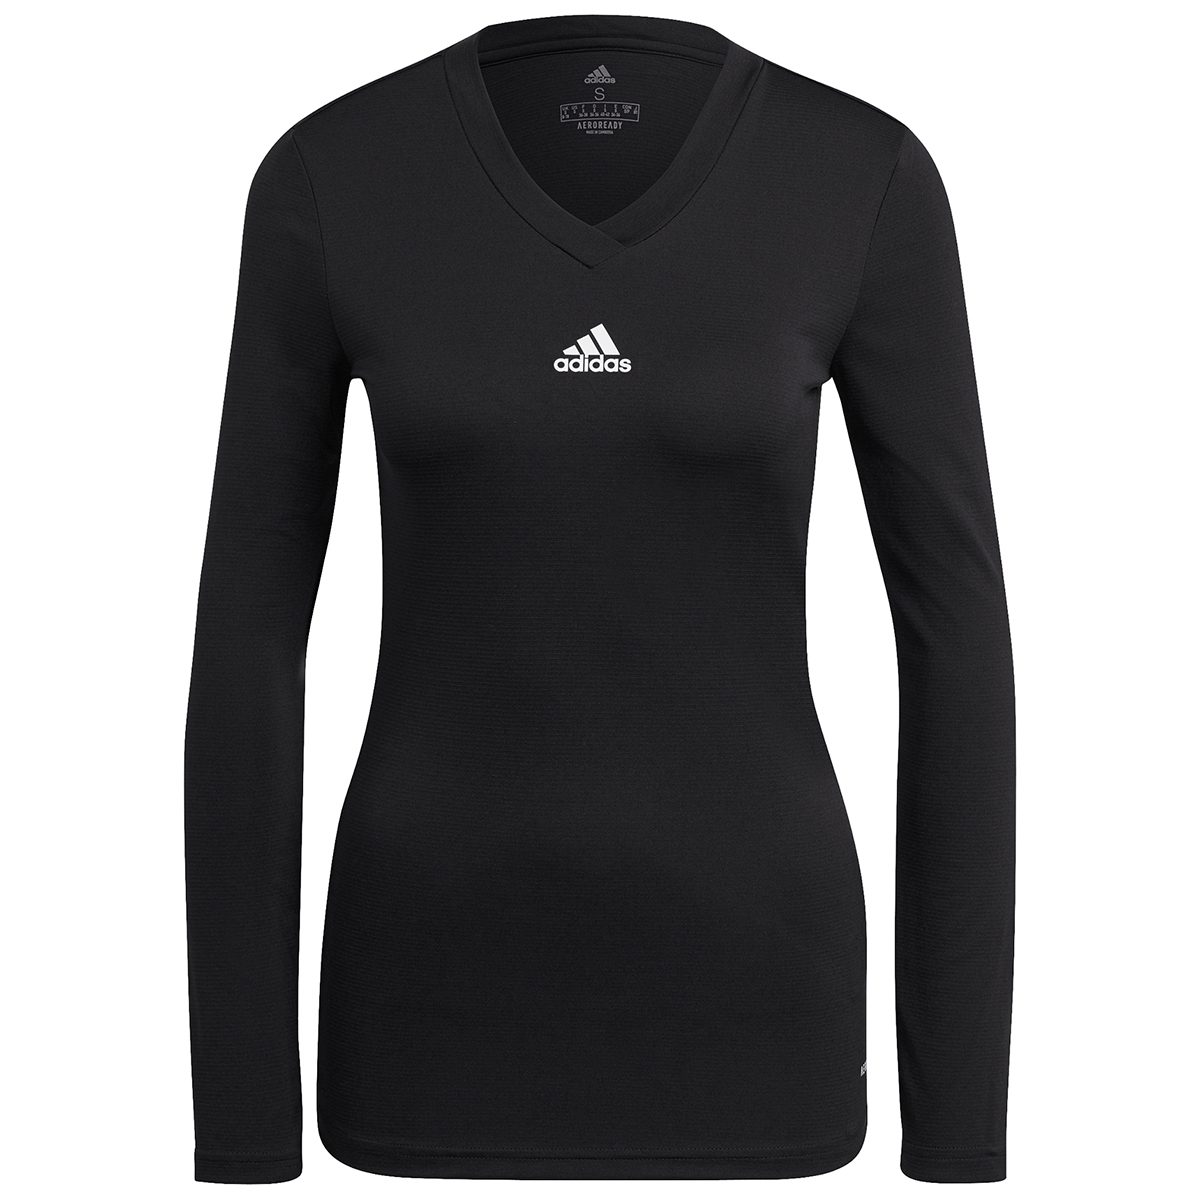 Adidas Women's Team Base Long Sleeve Soccer Tee